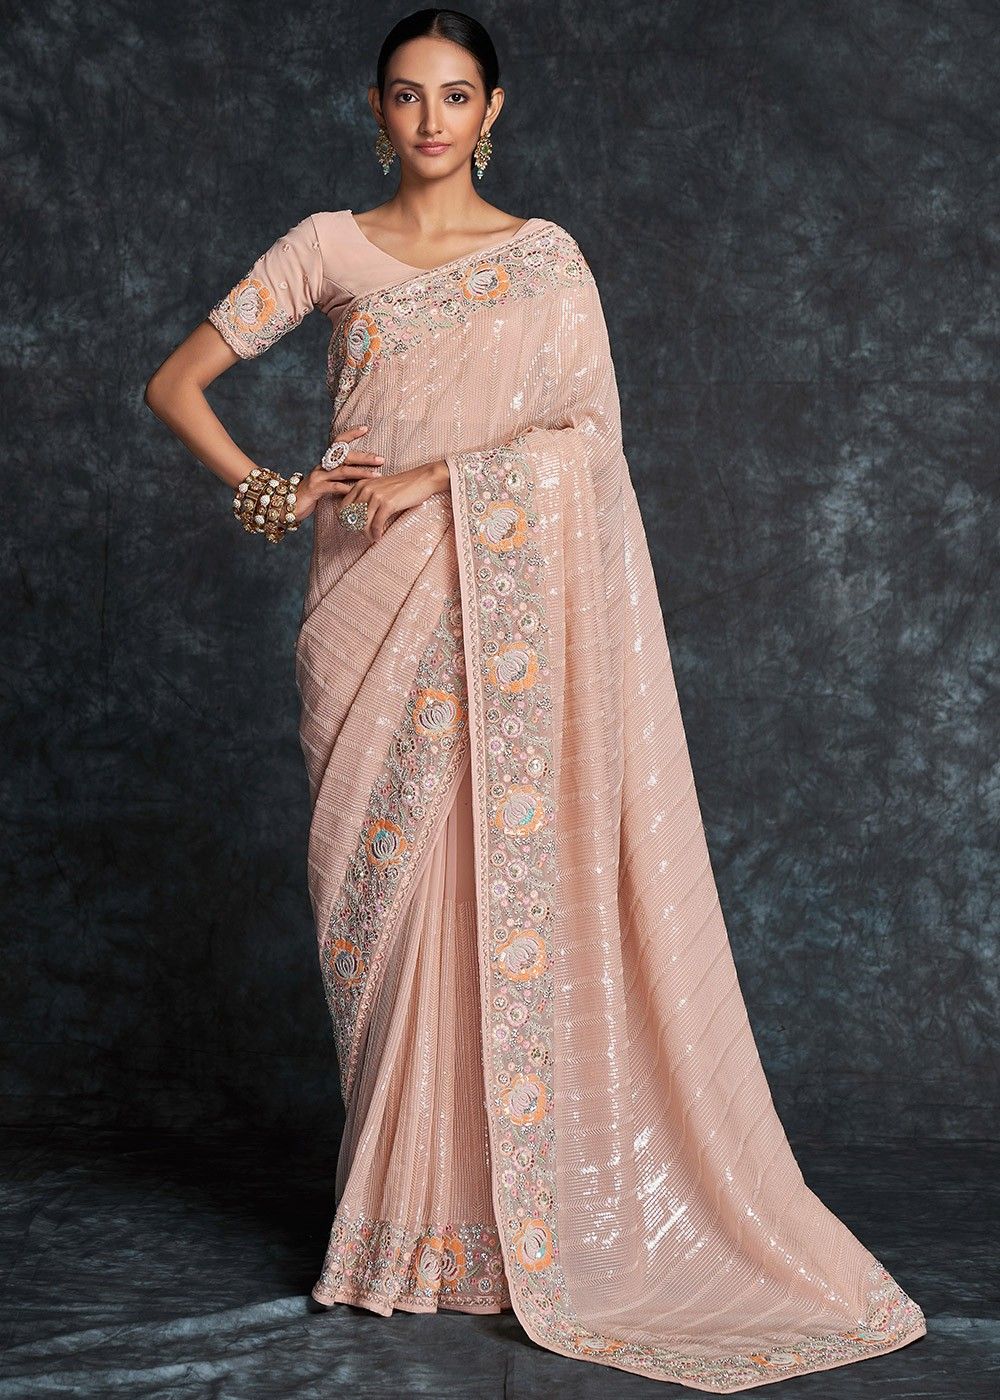 Gorgeous Sequin Sarees You Can Recreate This Festive Season - GoodTimes:  Lifestyle, Food, Travel, Fashion, Weddings, Bollywood, Tech, Videos & Photos